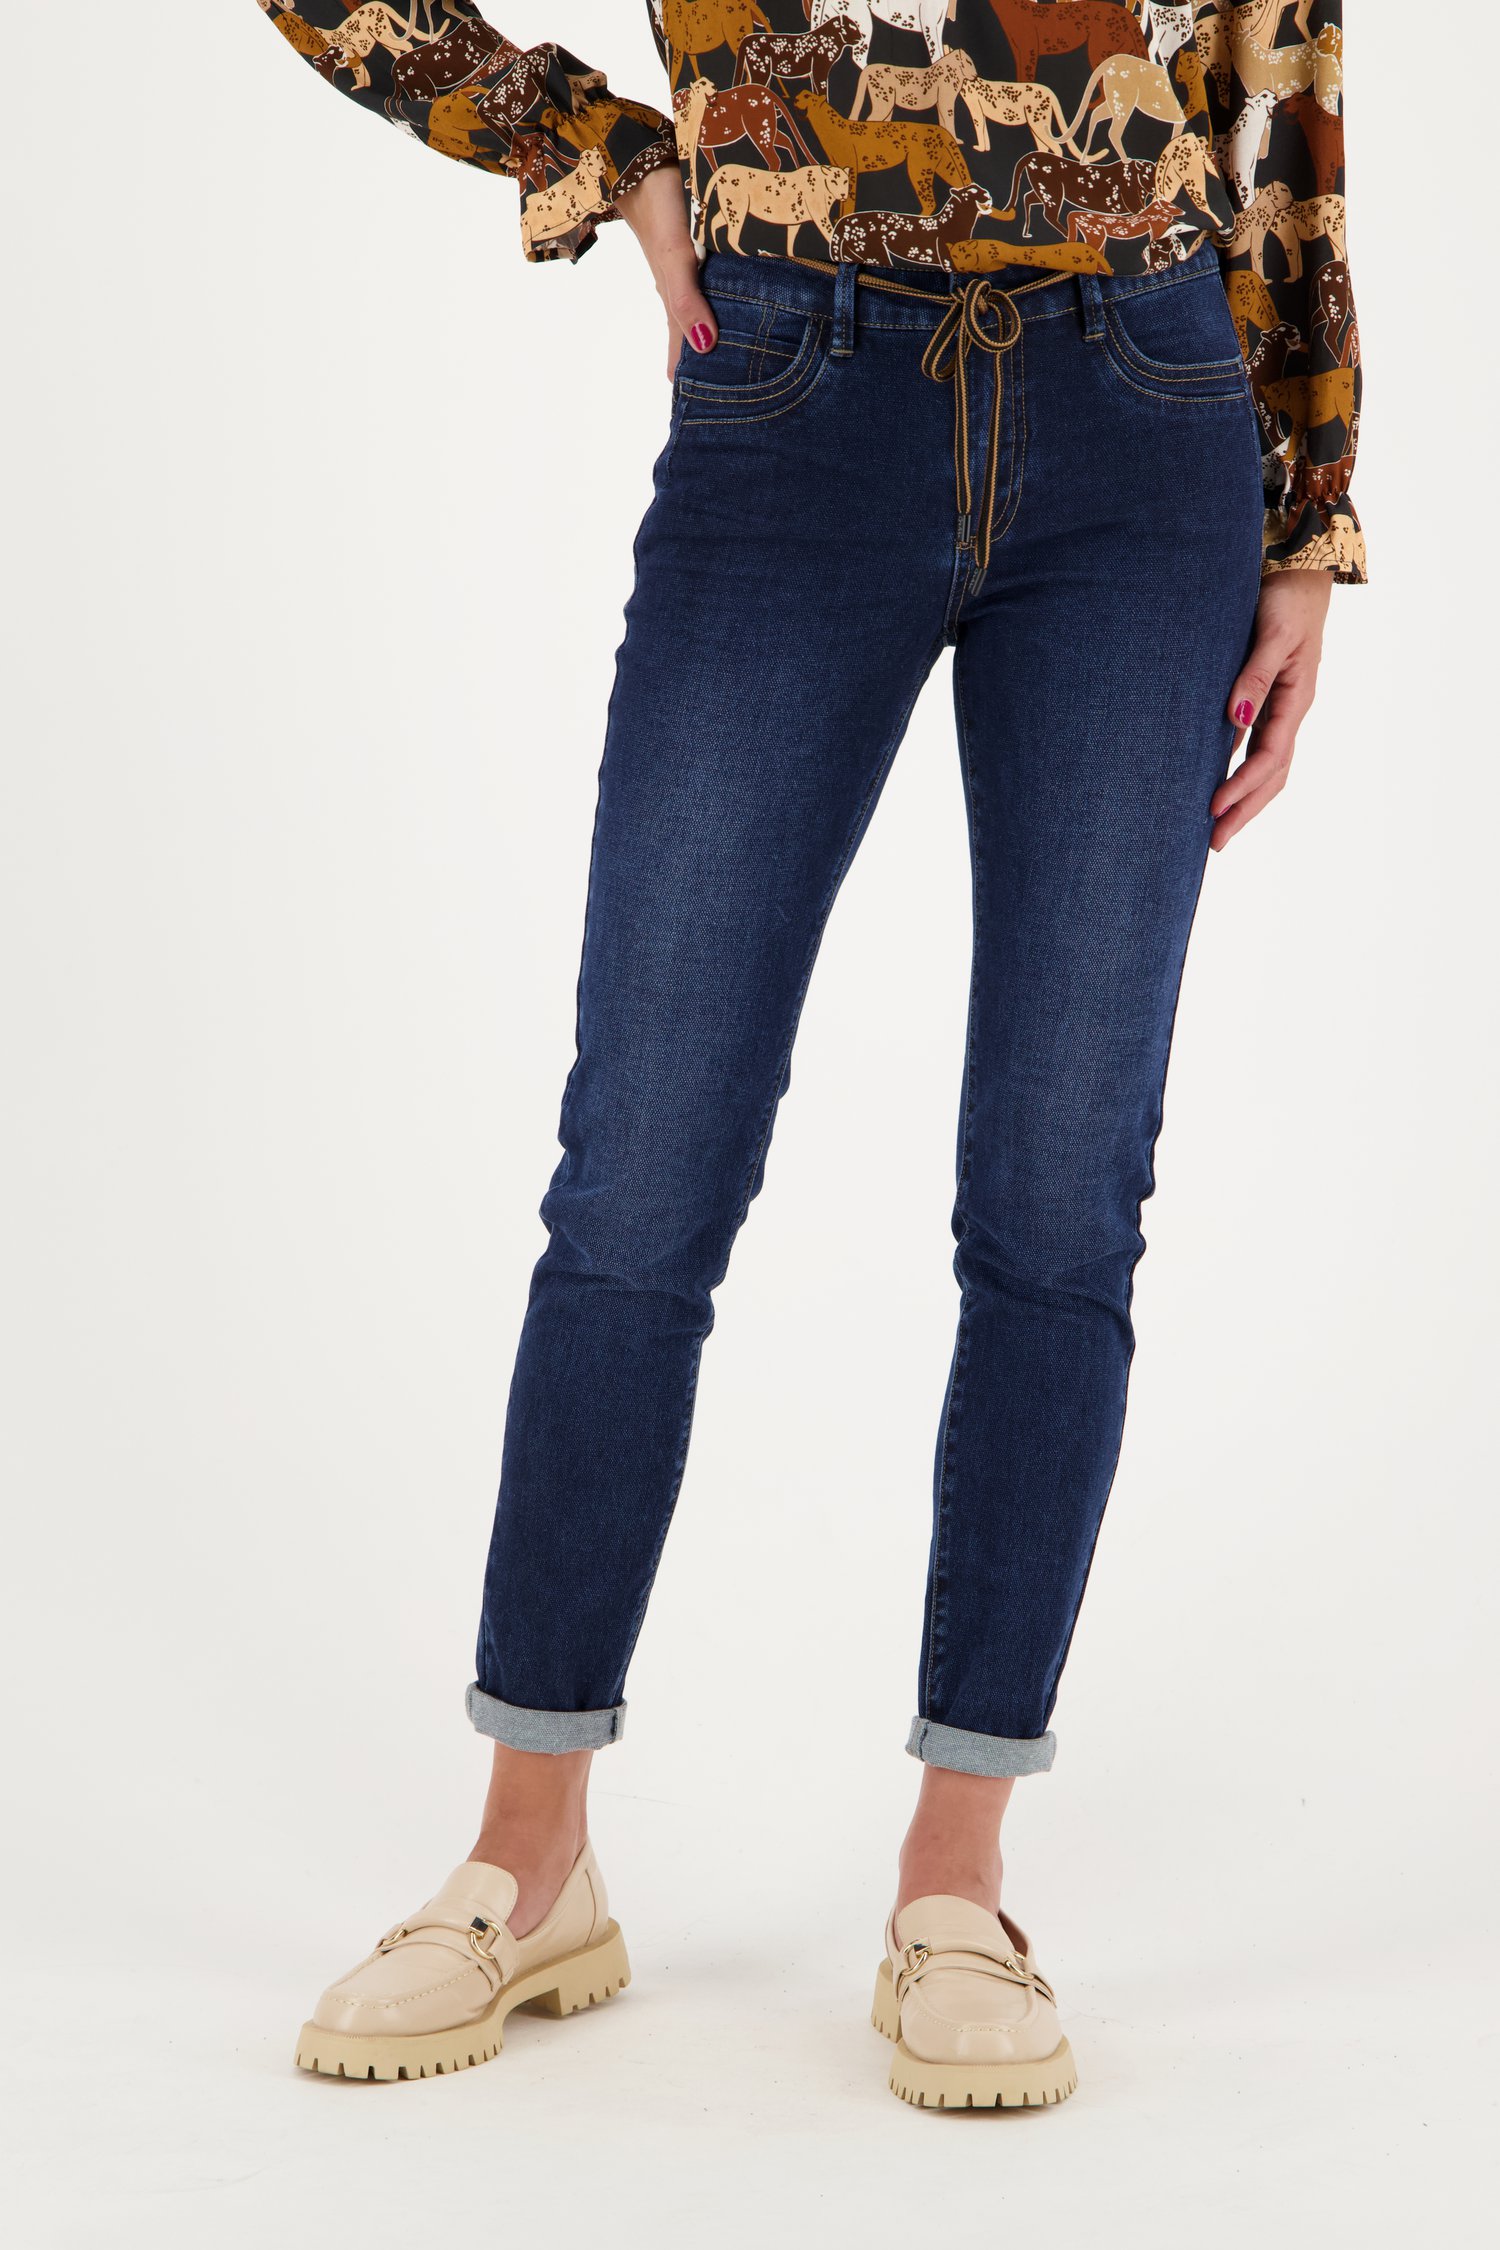 radicaal Pittig compact Donkerblauwe jeans - slim fit van Geisha | 9696663 | e5